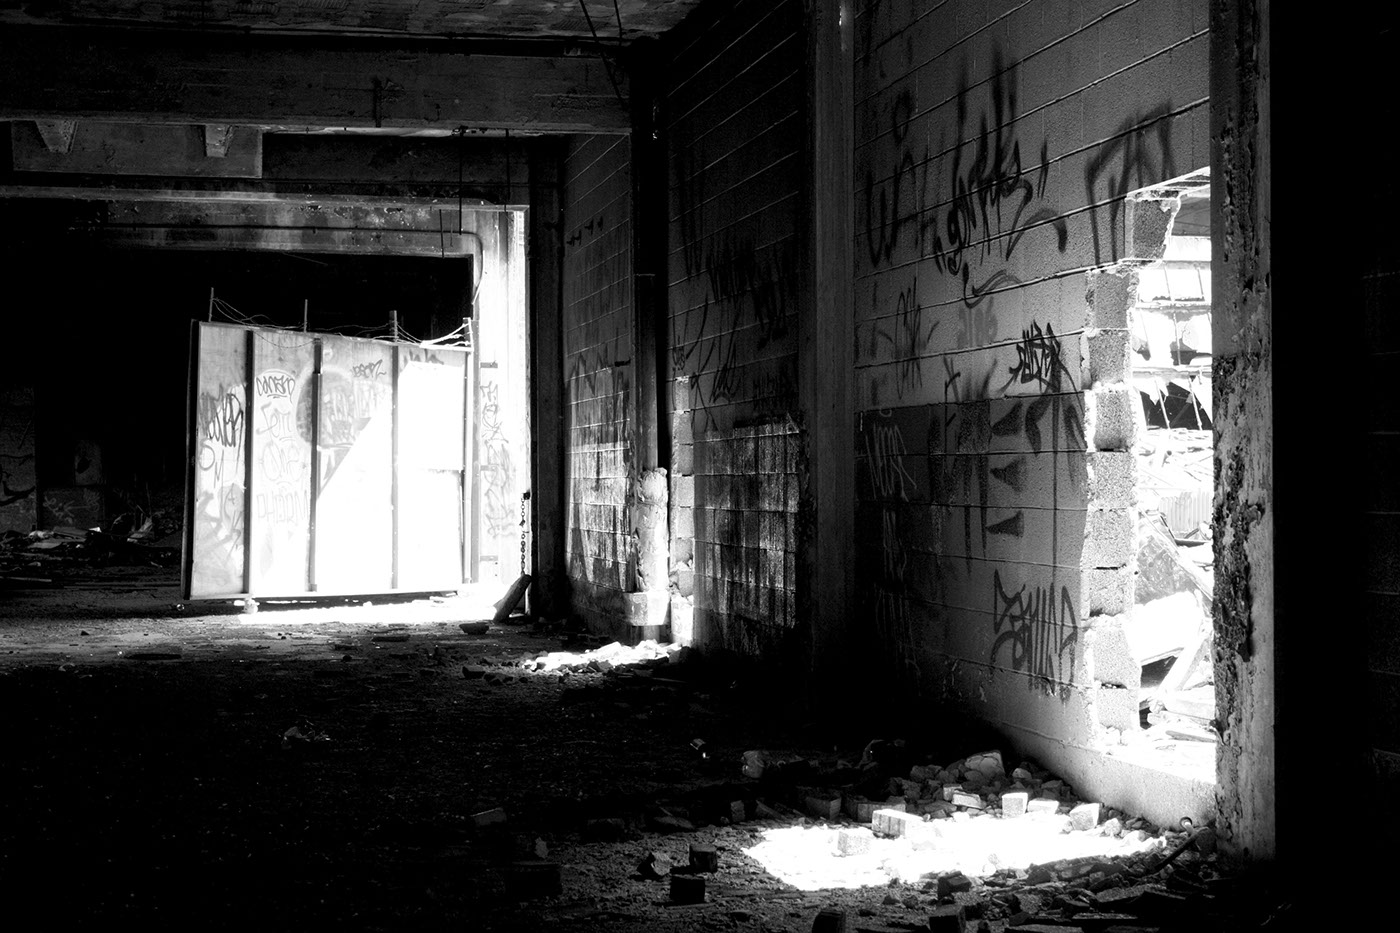 black & white abandon detroit Michigan broken trash Michigan Grand Central Station The Packard Graffiti tags light essence grit dirt hope sad building Beaten ugly texture steel wood illegal